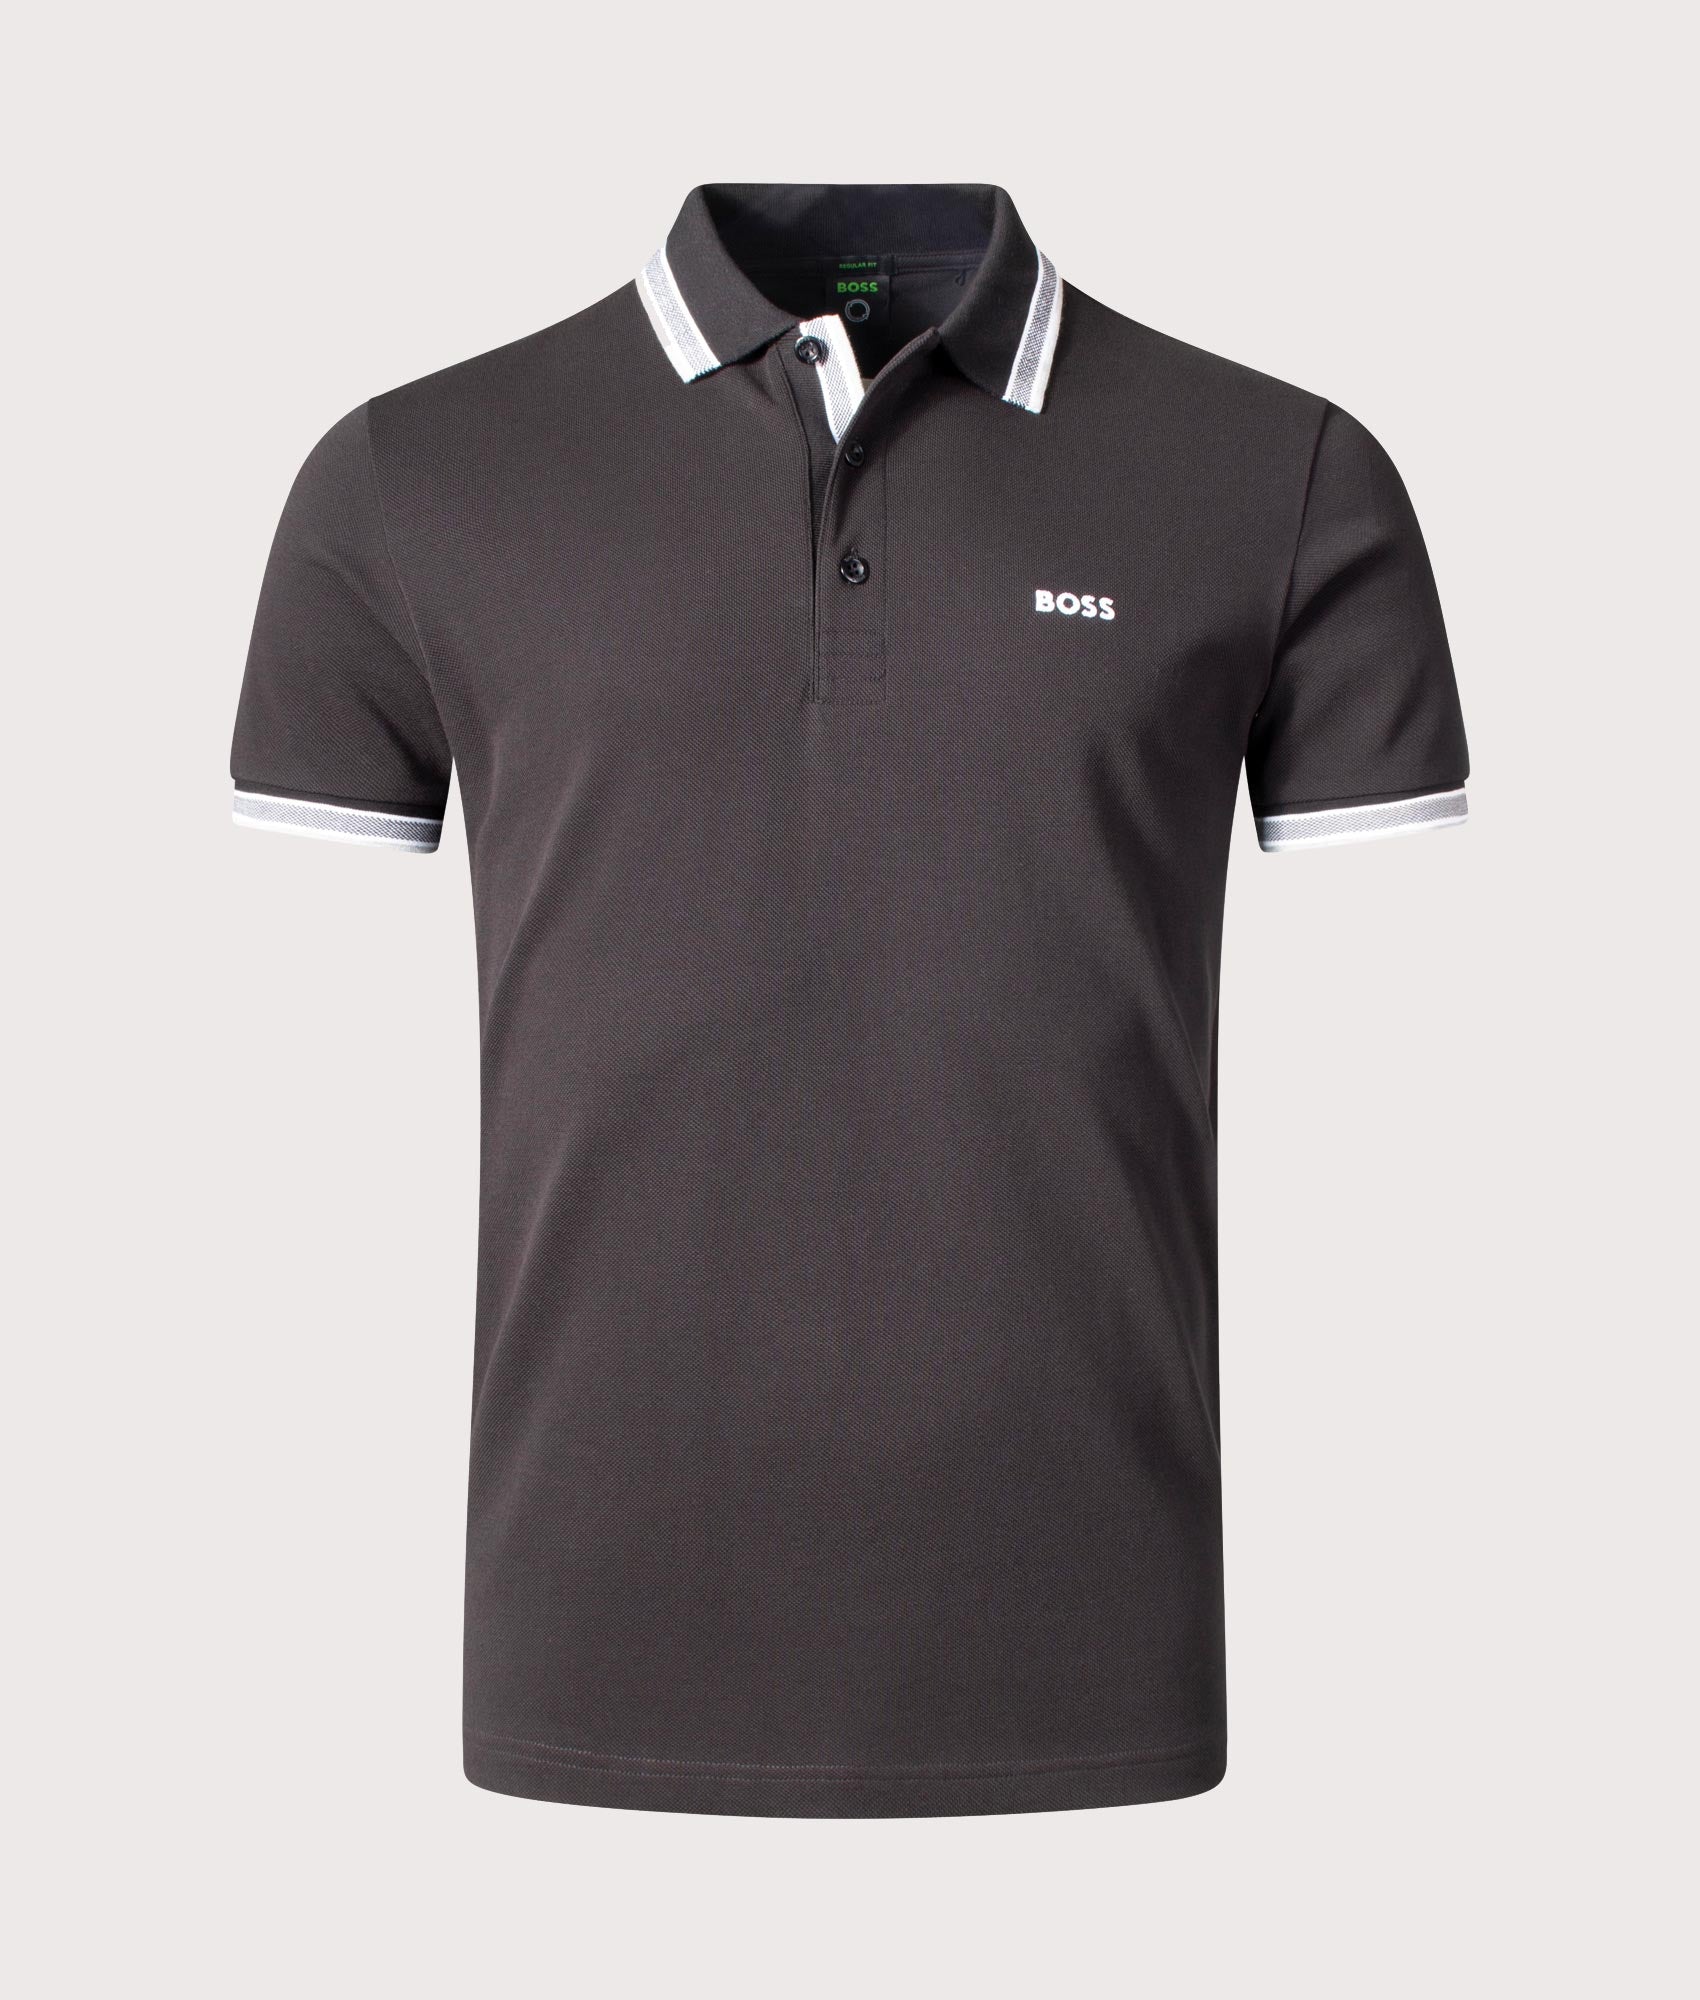 BOSS Mens Paddy Polo Shirt - Colour: 001 Black - Size: Large